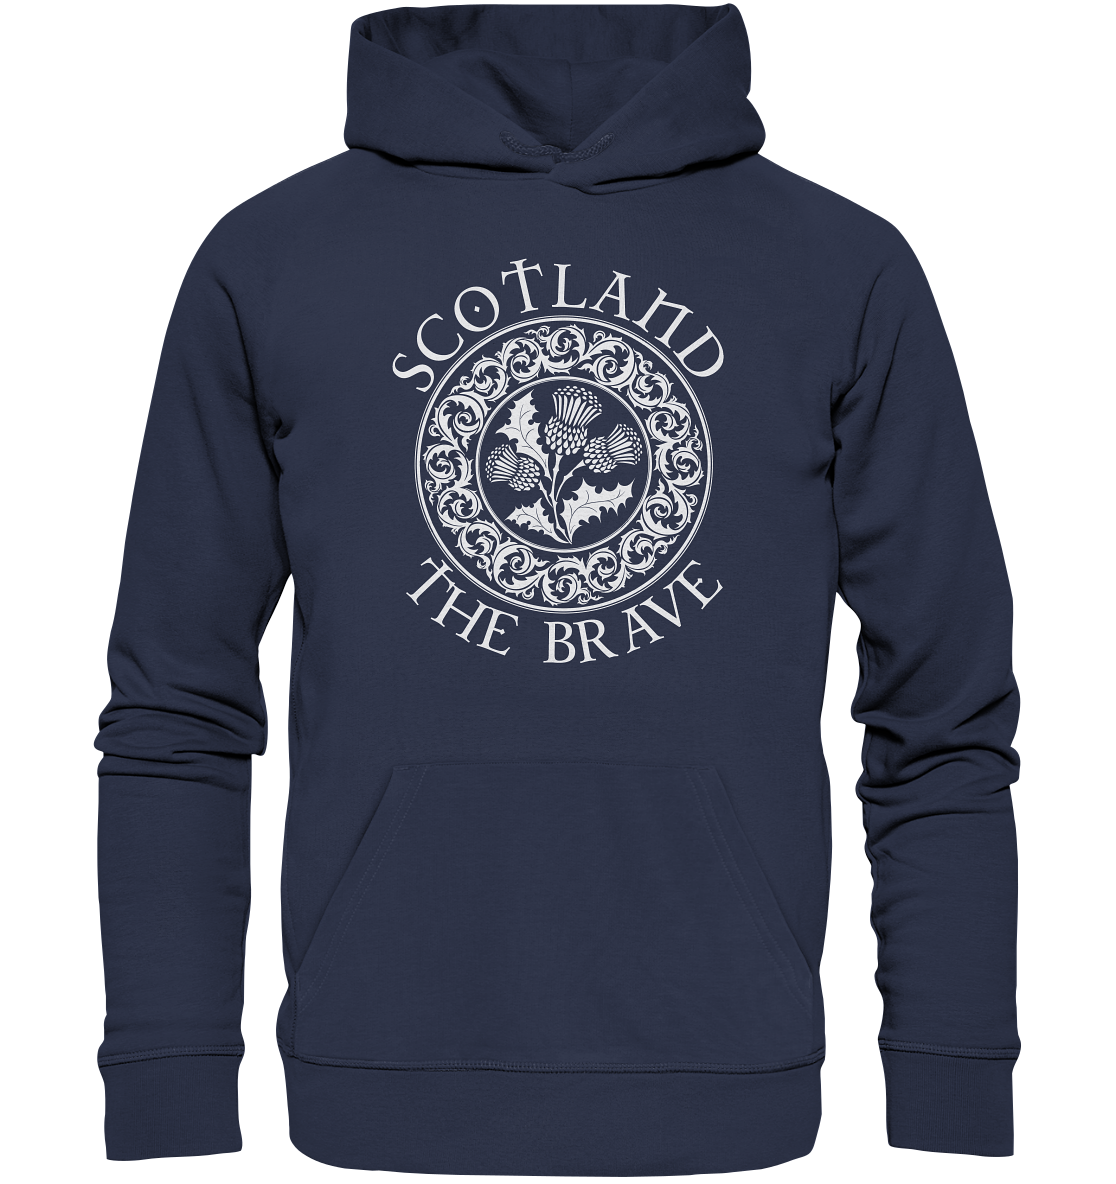 Scotland "The Brave" - Premium Unisex Hoodie